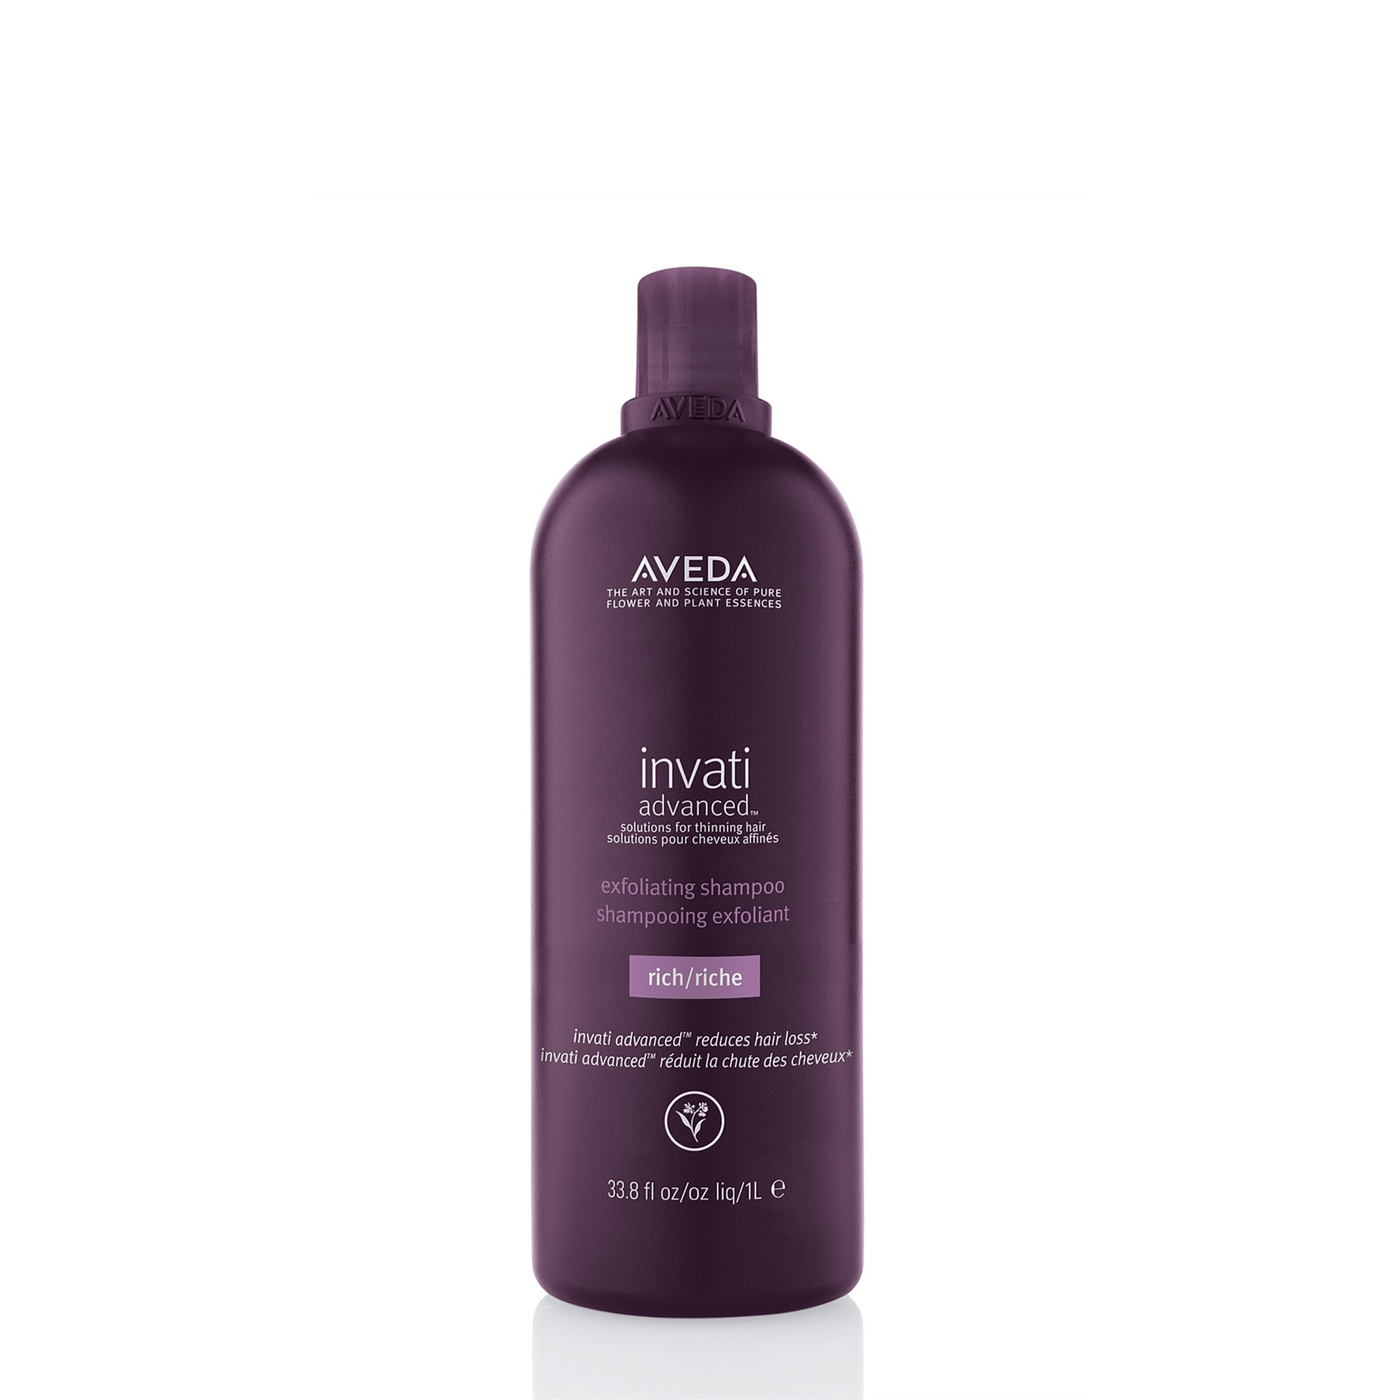 Aveda Shampoo Aveda- Invati advanced exfoliating shampoo rich 1 Litre